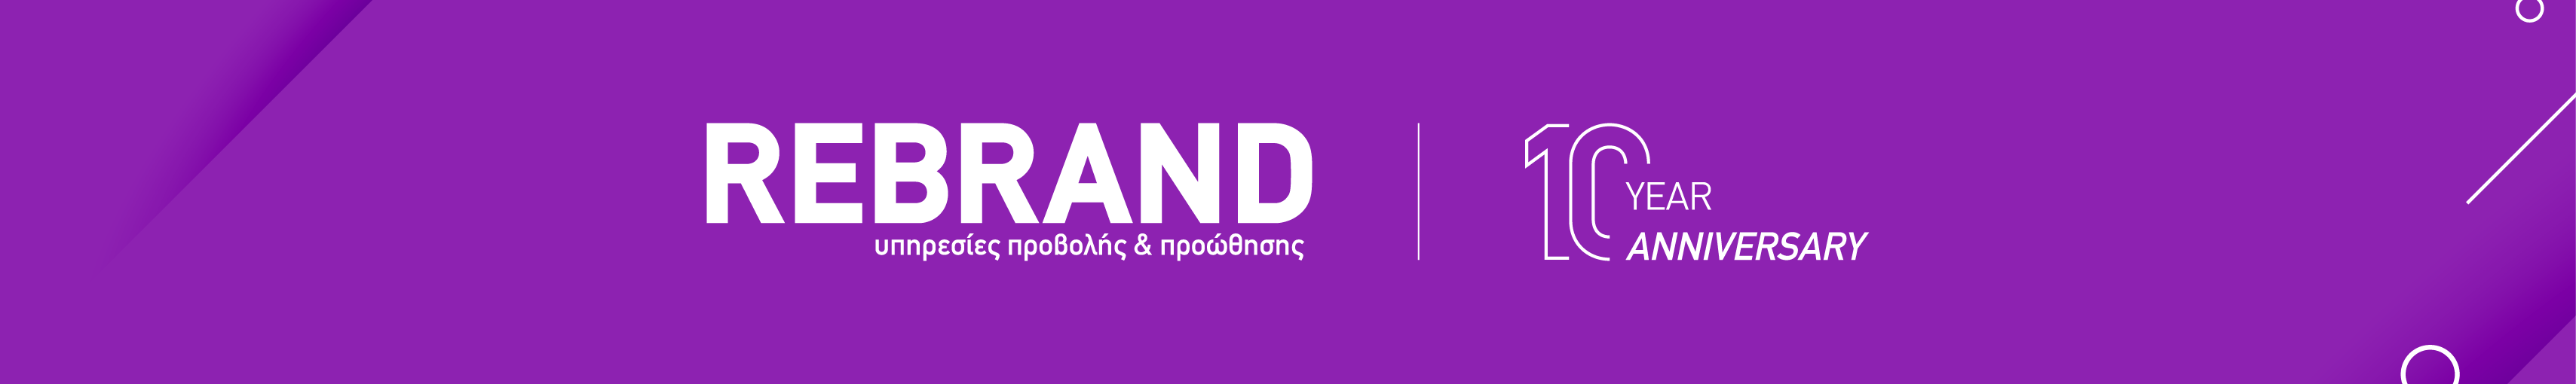 REBRAND - υπηρεσίες προβολής & προώθησης profil başlığı